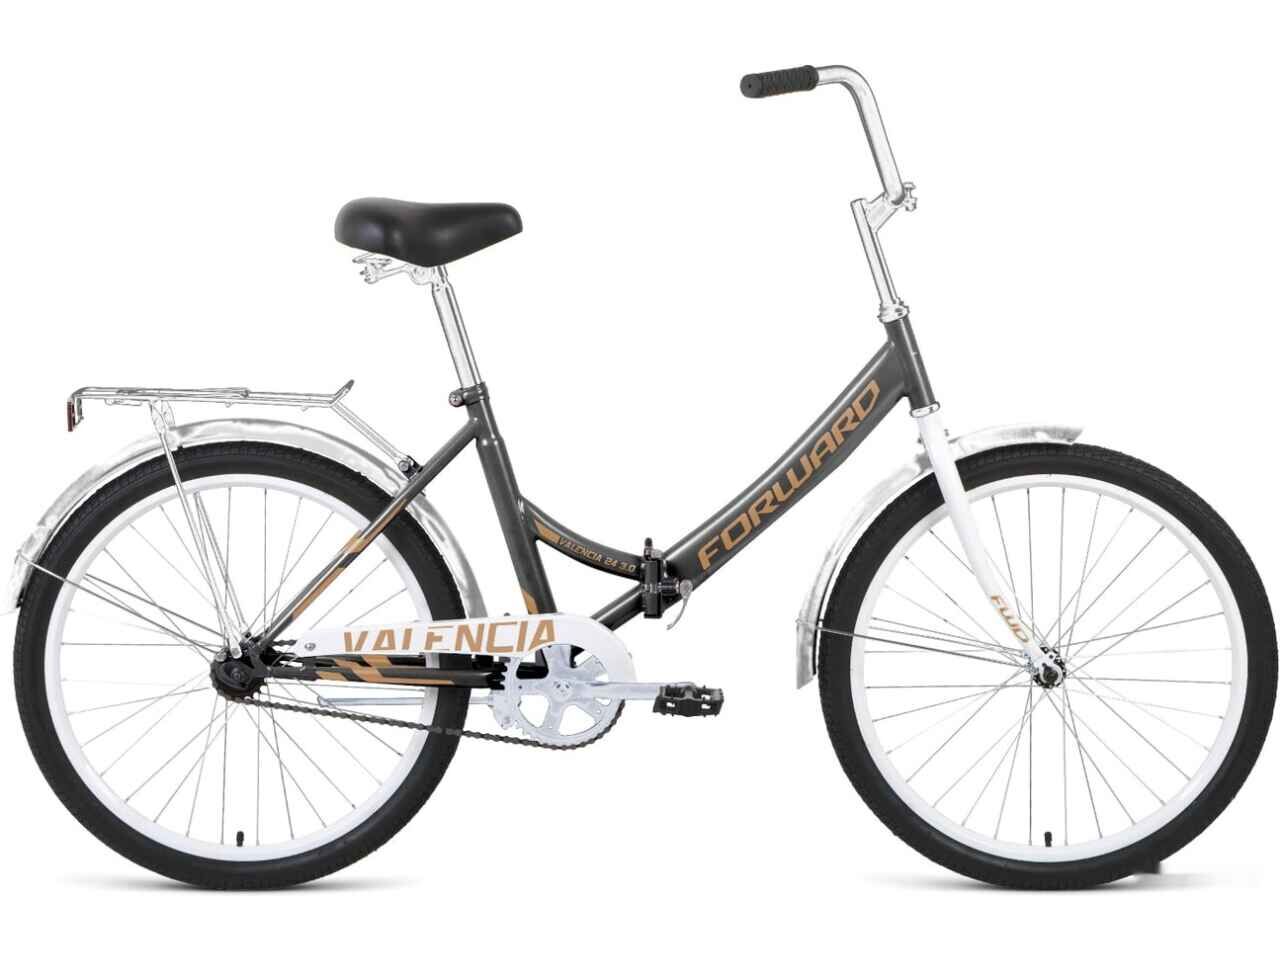 Велосипед Forward Valencia 24 3.0 (16, серый/бежевый, 2021)